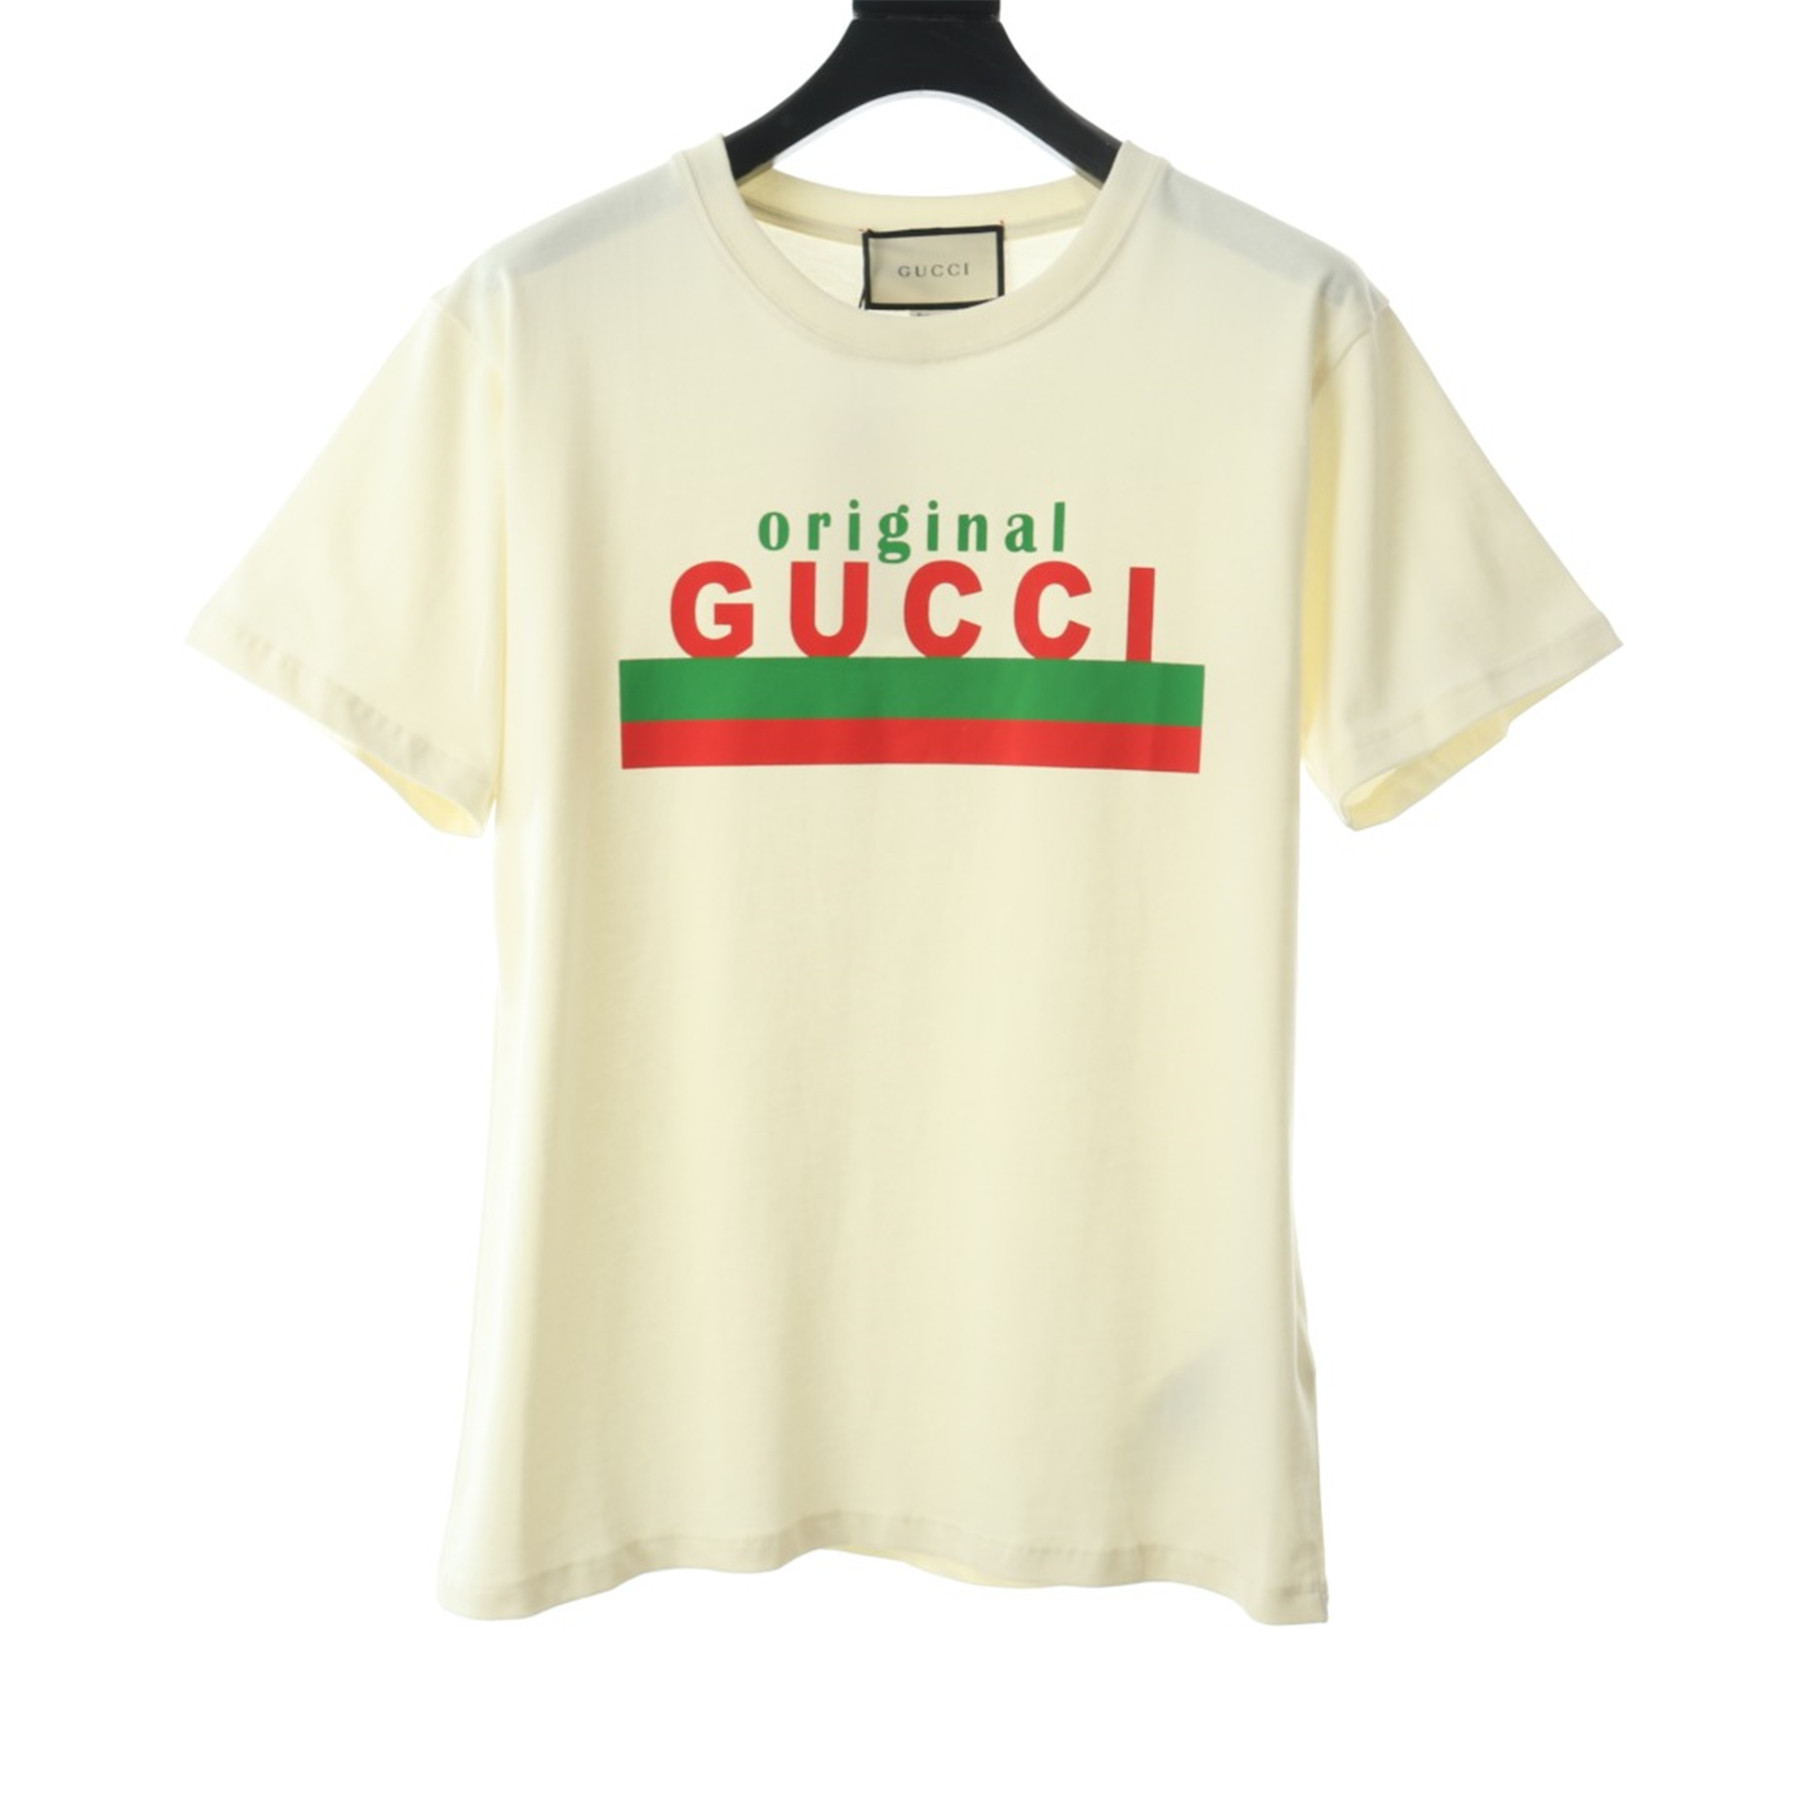 gucci shirts,fashion clothes